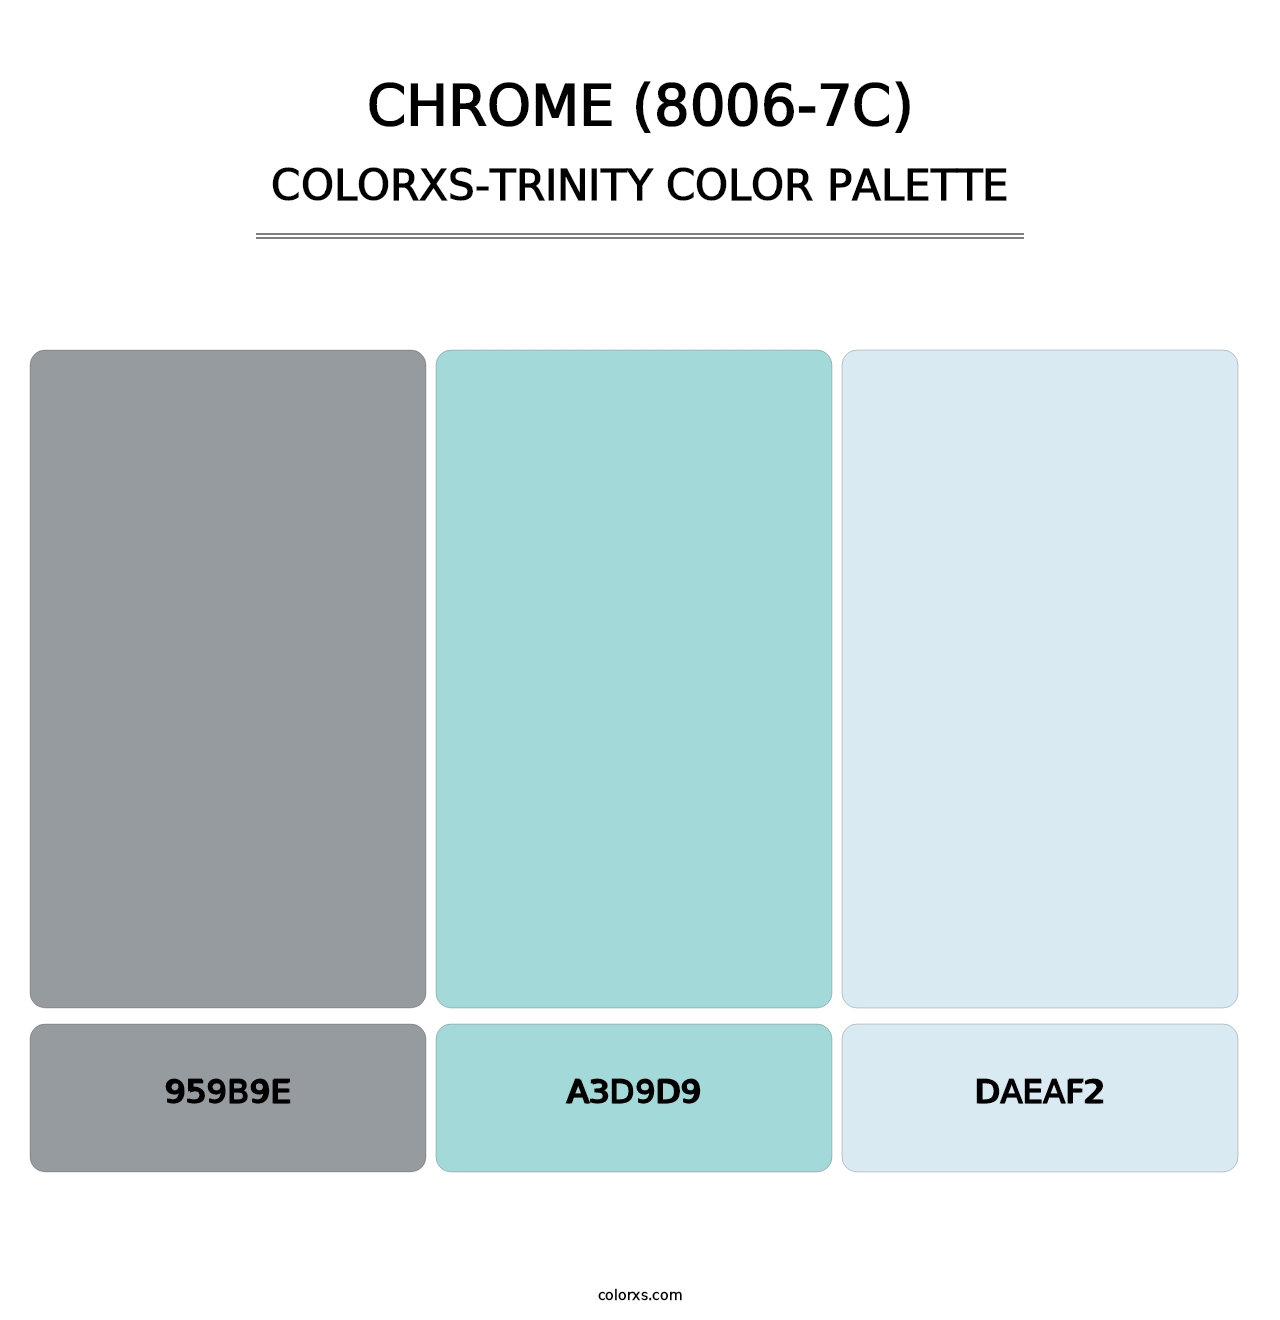 Chrome (8006-7C) - Colorxs Trinity Palette